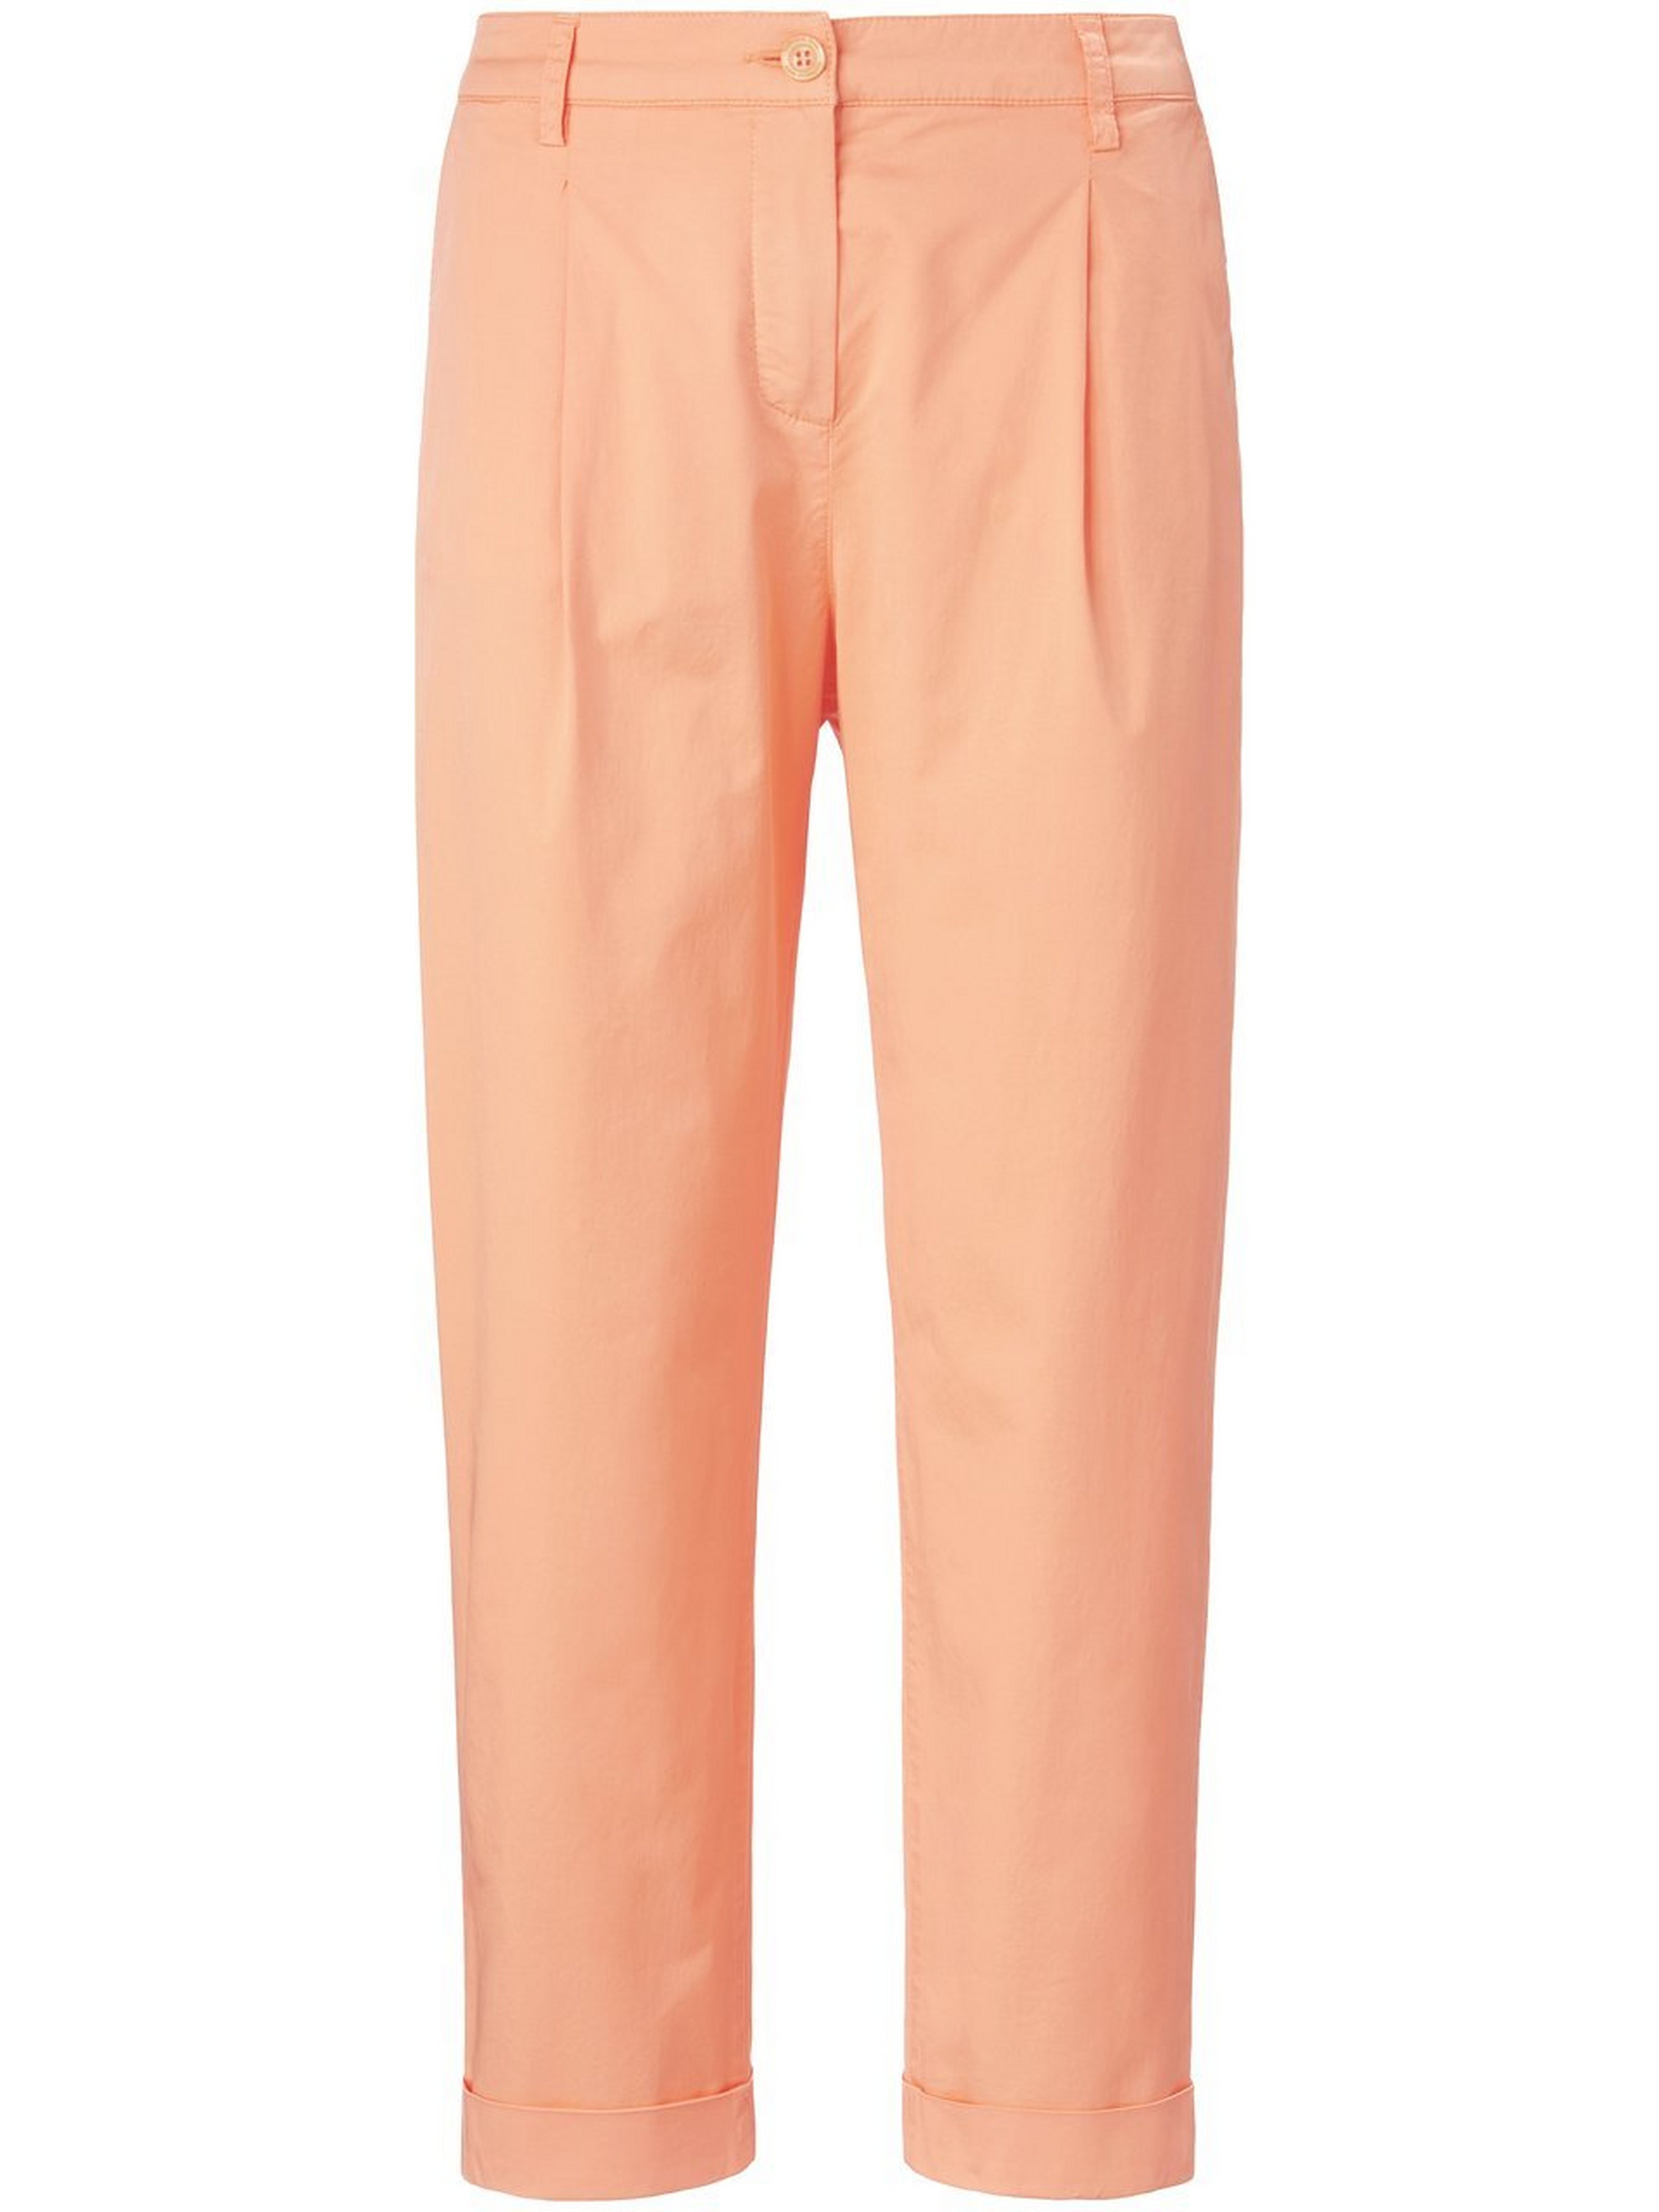 Le pantalon 7/8 modèle Marlena  Raffaello Rossi orange